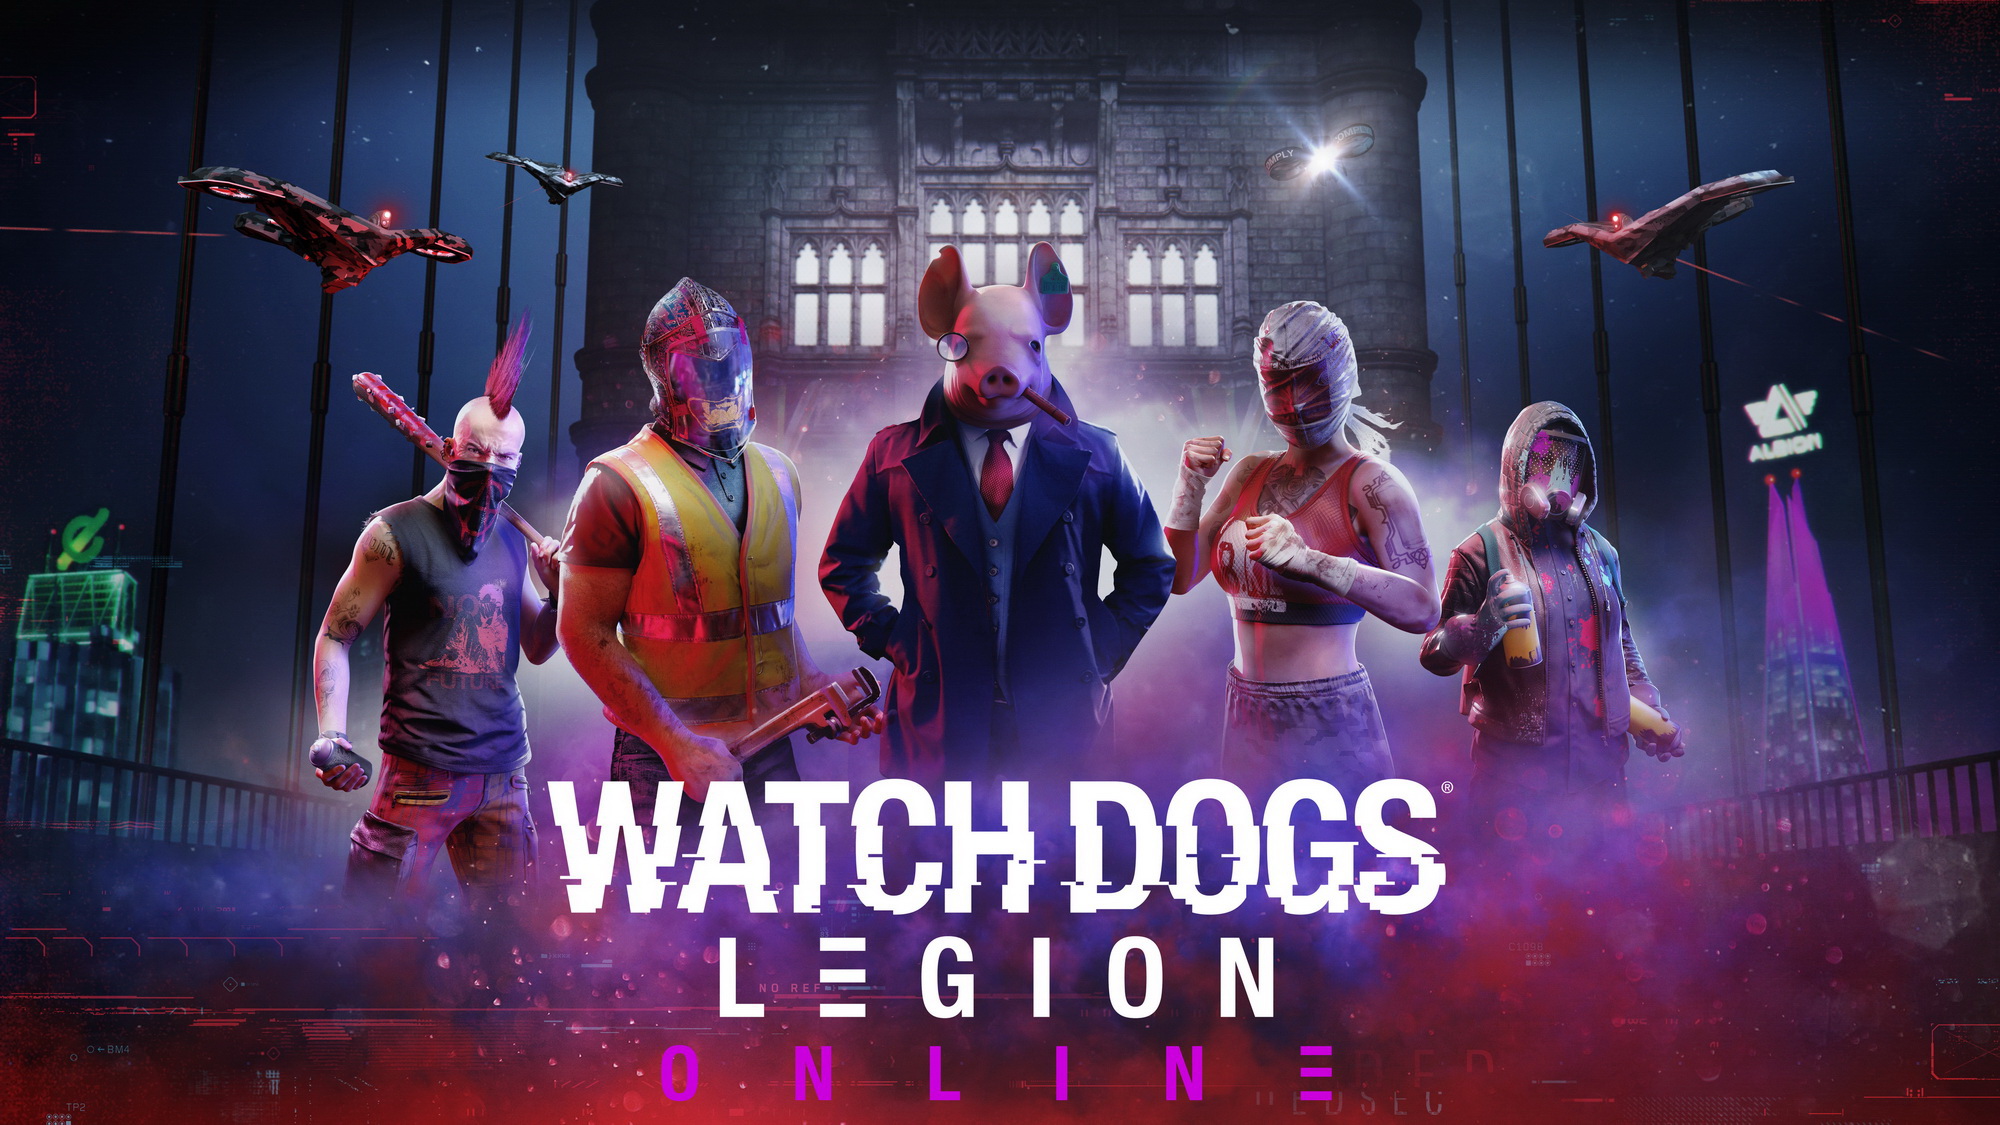 Watchdogs Legion Online mode